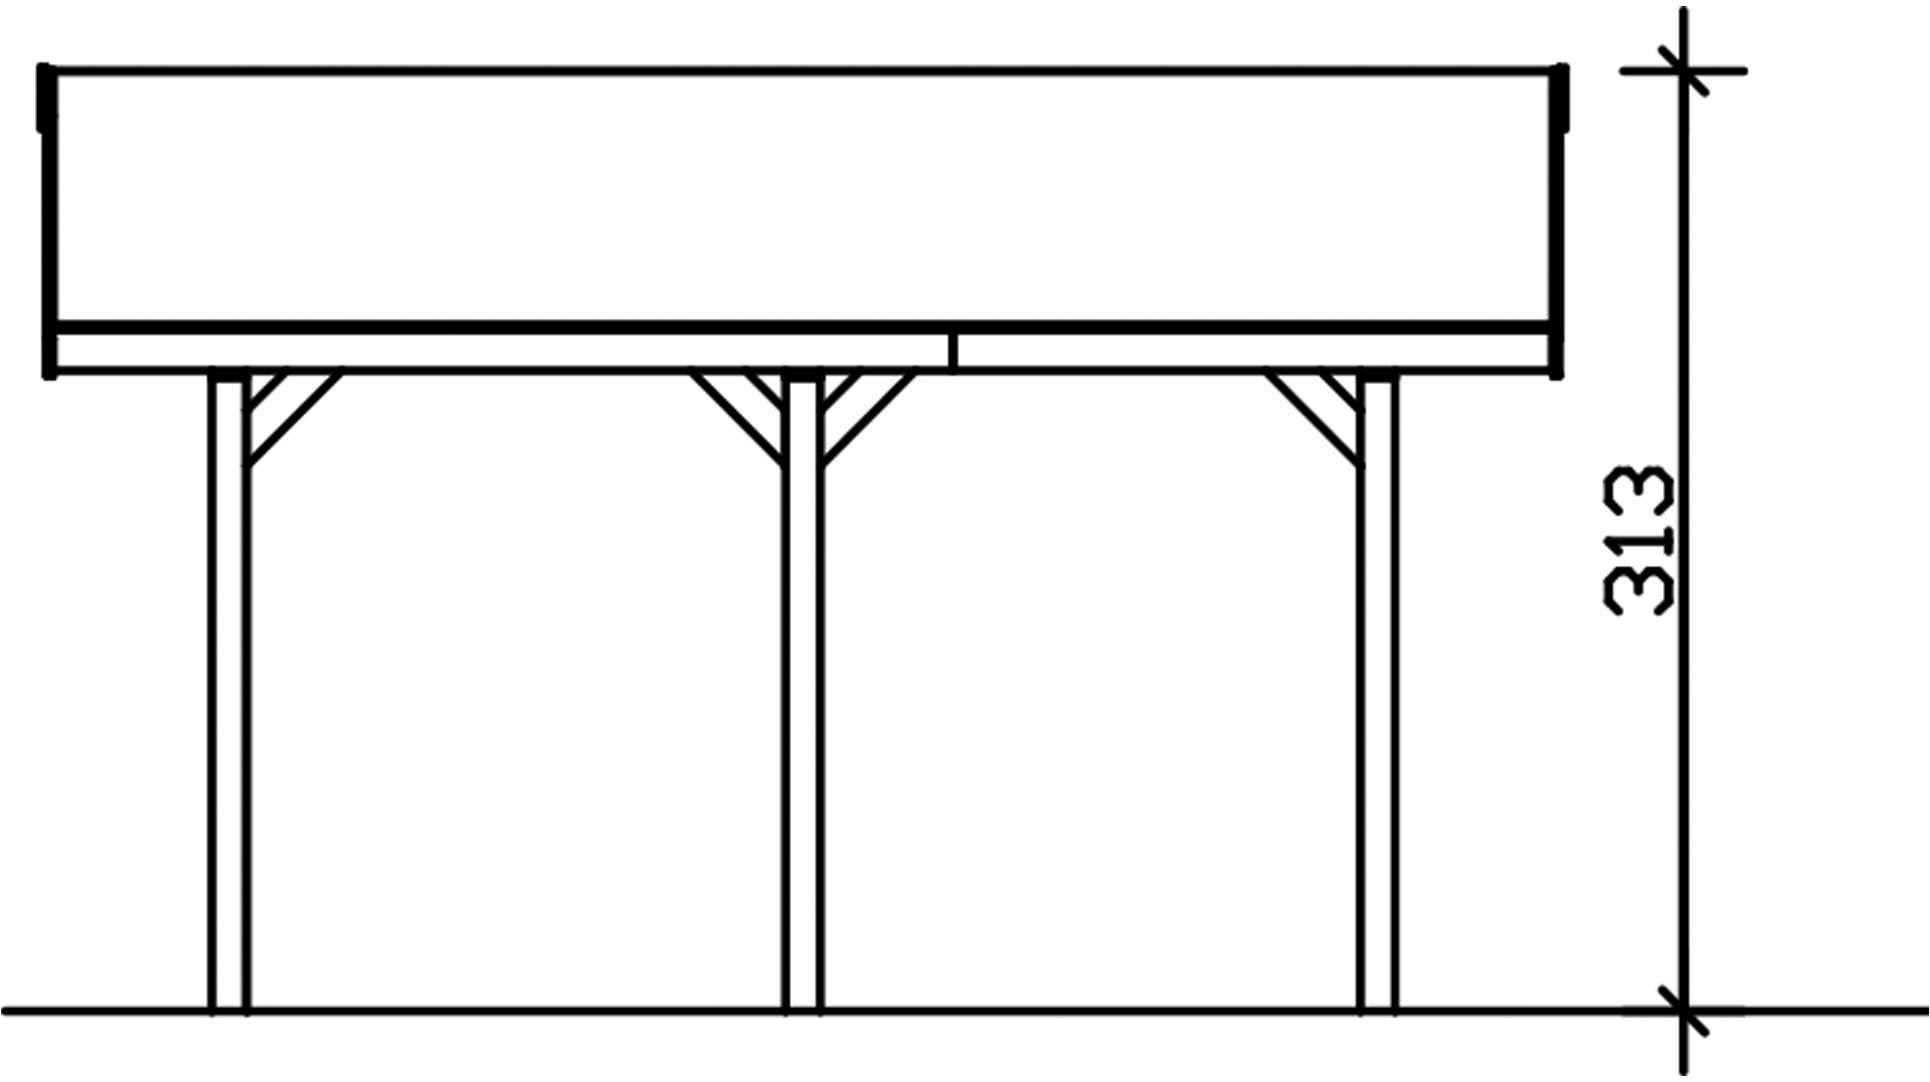 Skanholz Einzelcarport »Wallgau«, Nadelholz, 291 cm, Nussbaum, 380x500cm, mit Dachlattung